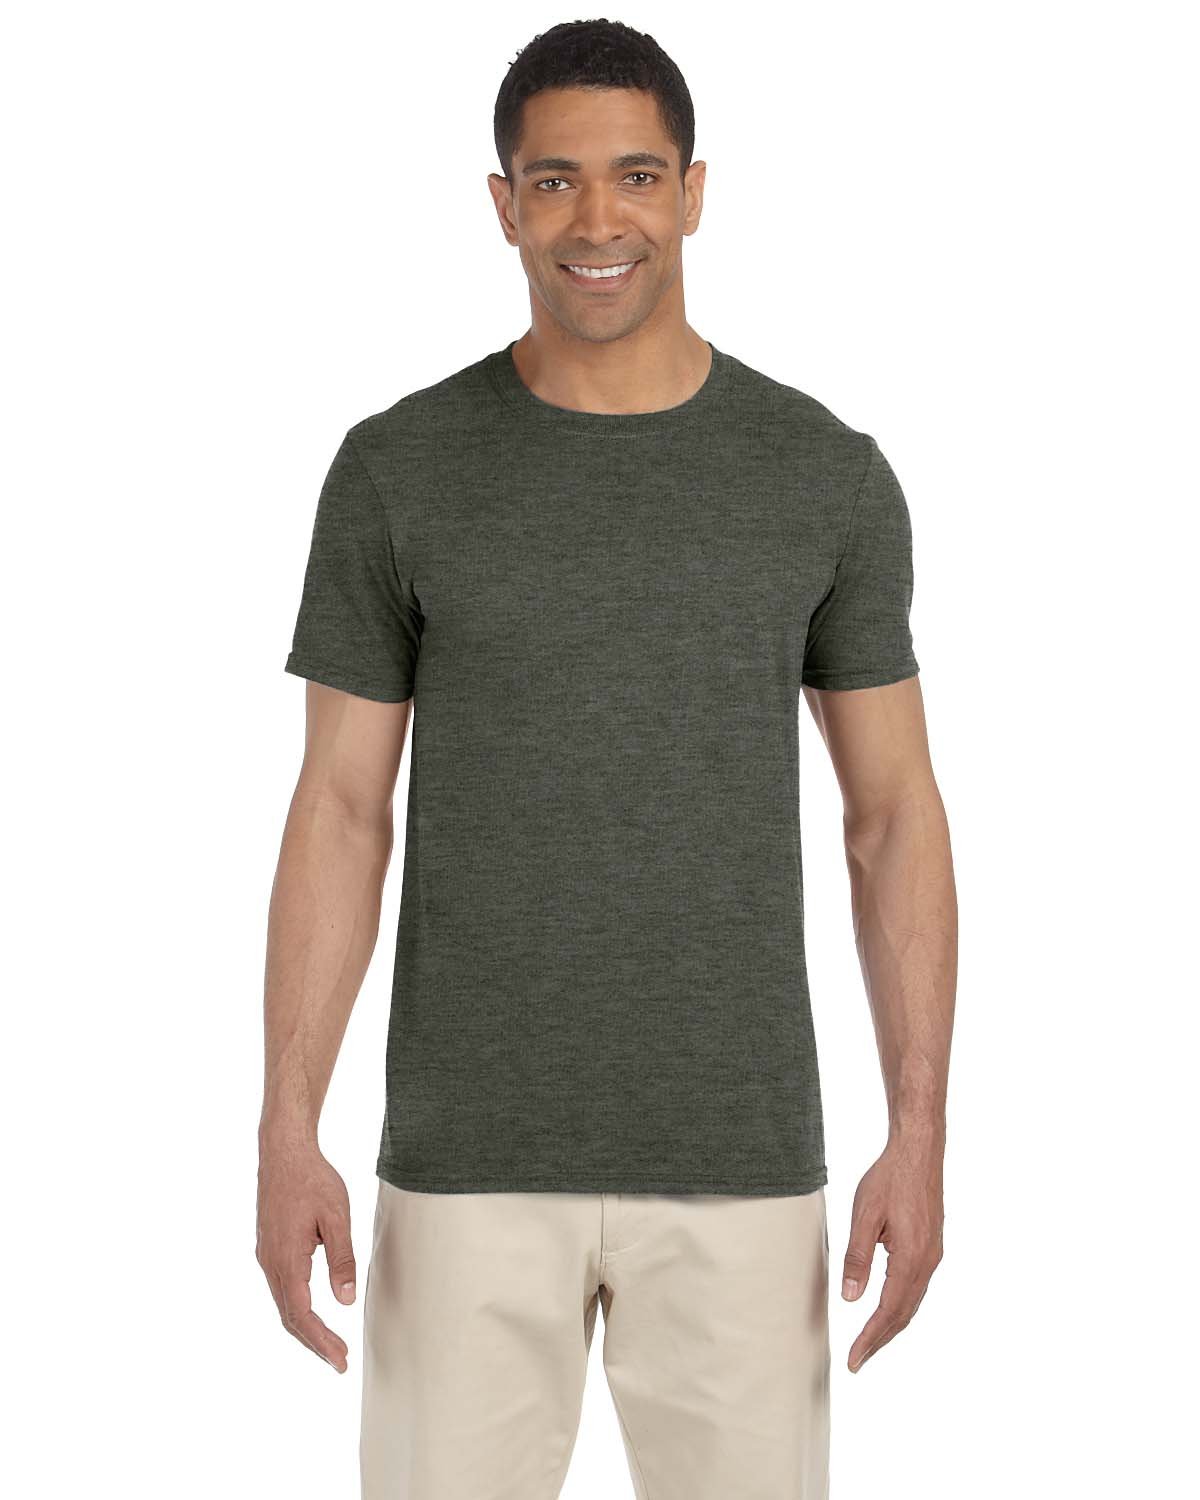 Gildan Adult Softstyle® T-Shirt hth military grn 